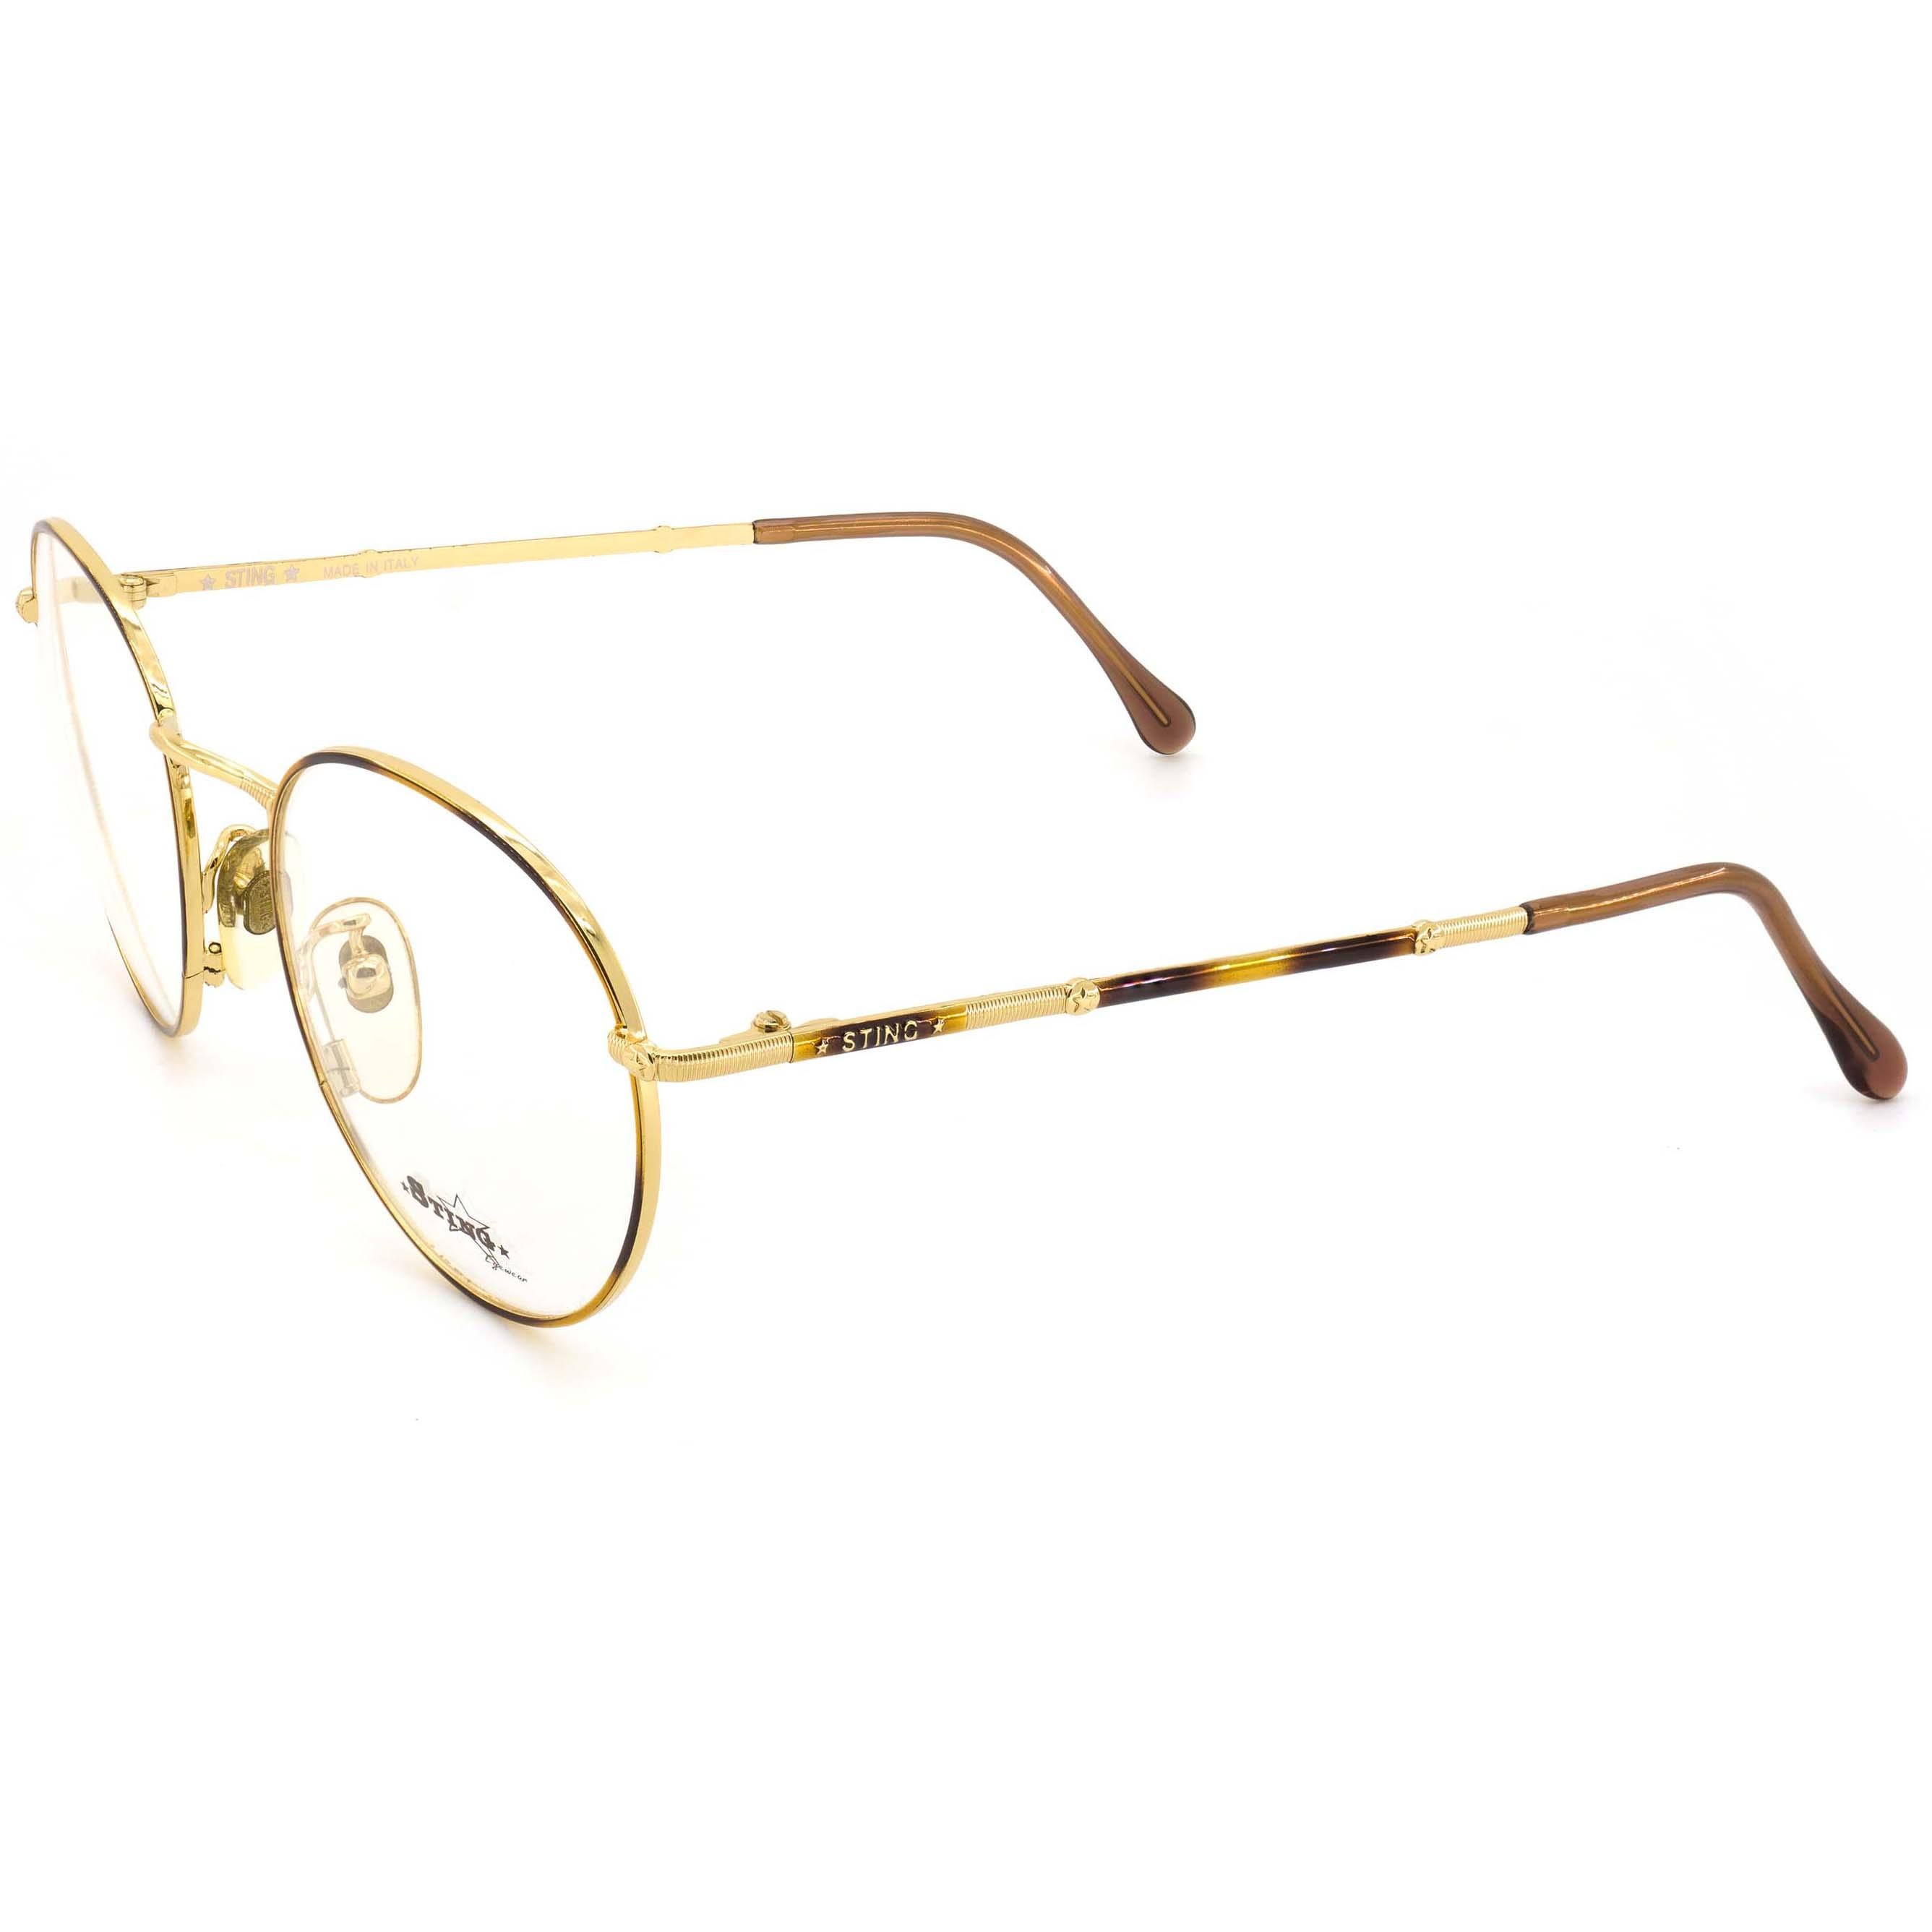 White Sting vintage eyeglasses, Italy 80s For Sale